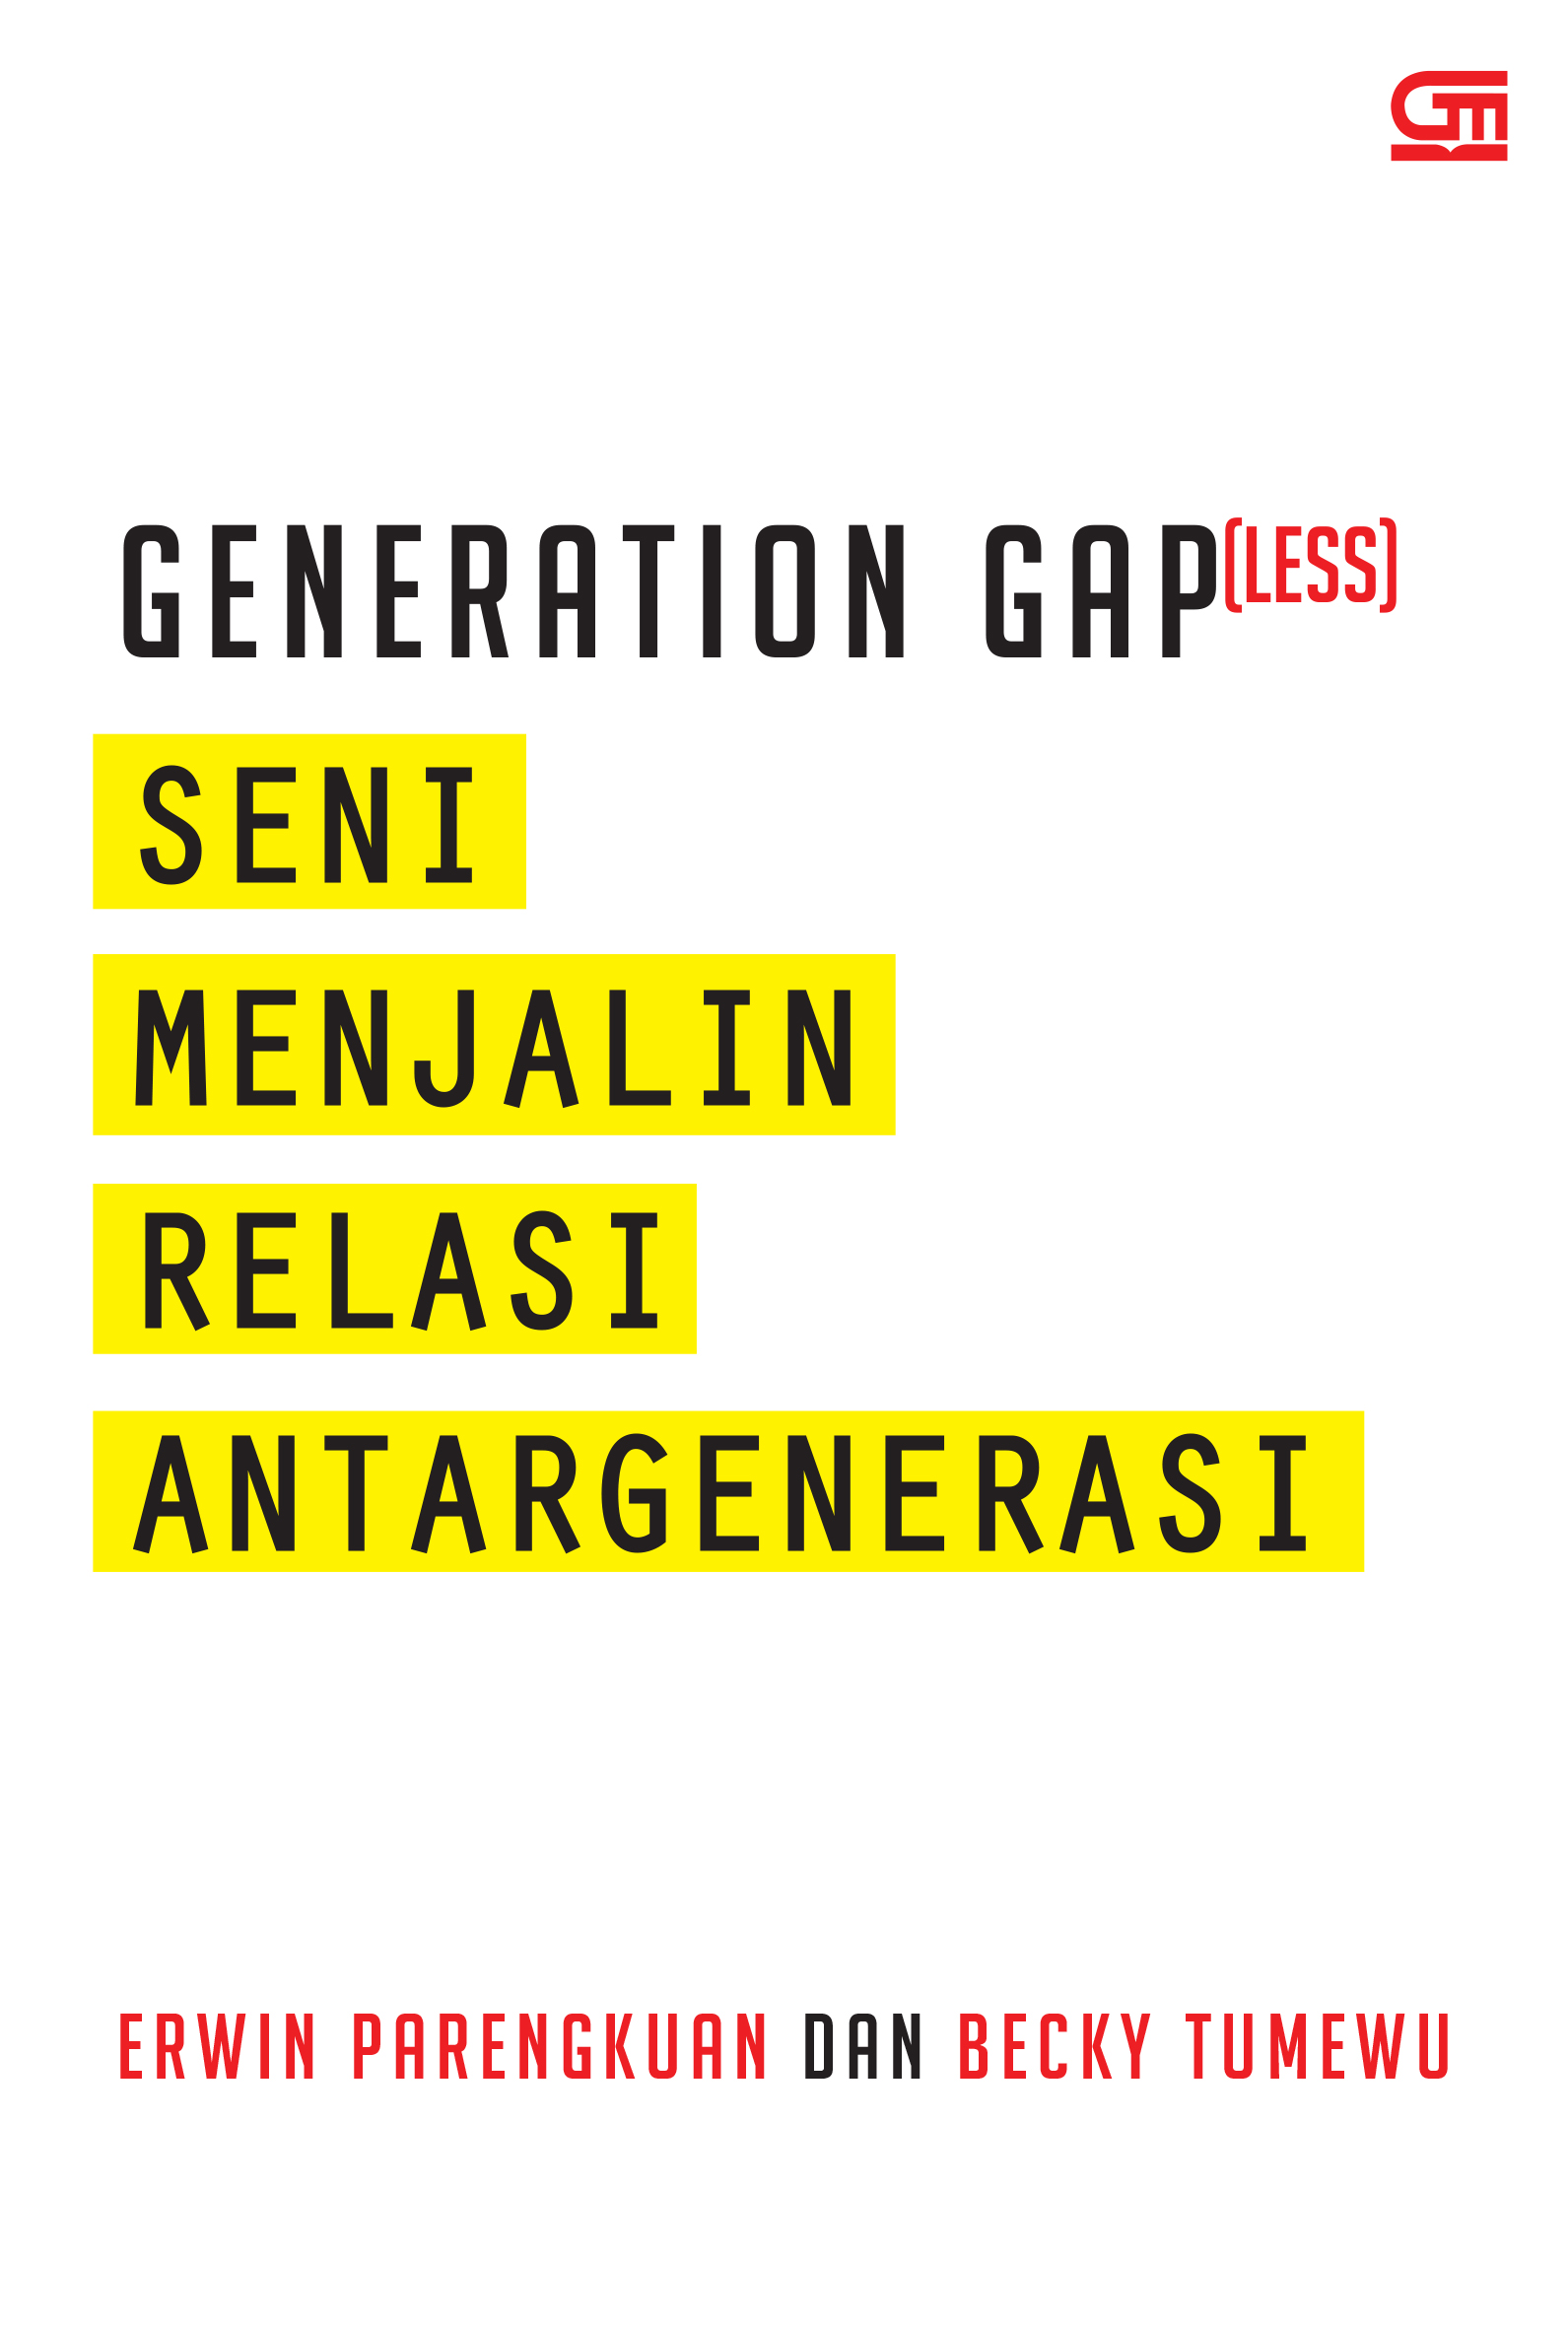 Generation Gap(less): Seni Menjalin Relasi Antargenerasi